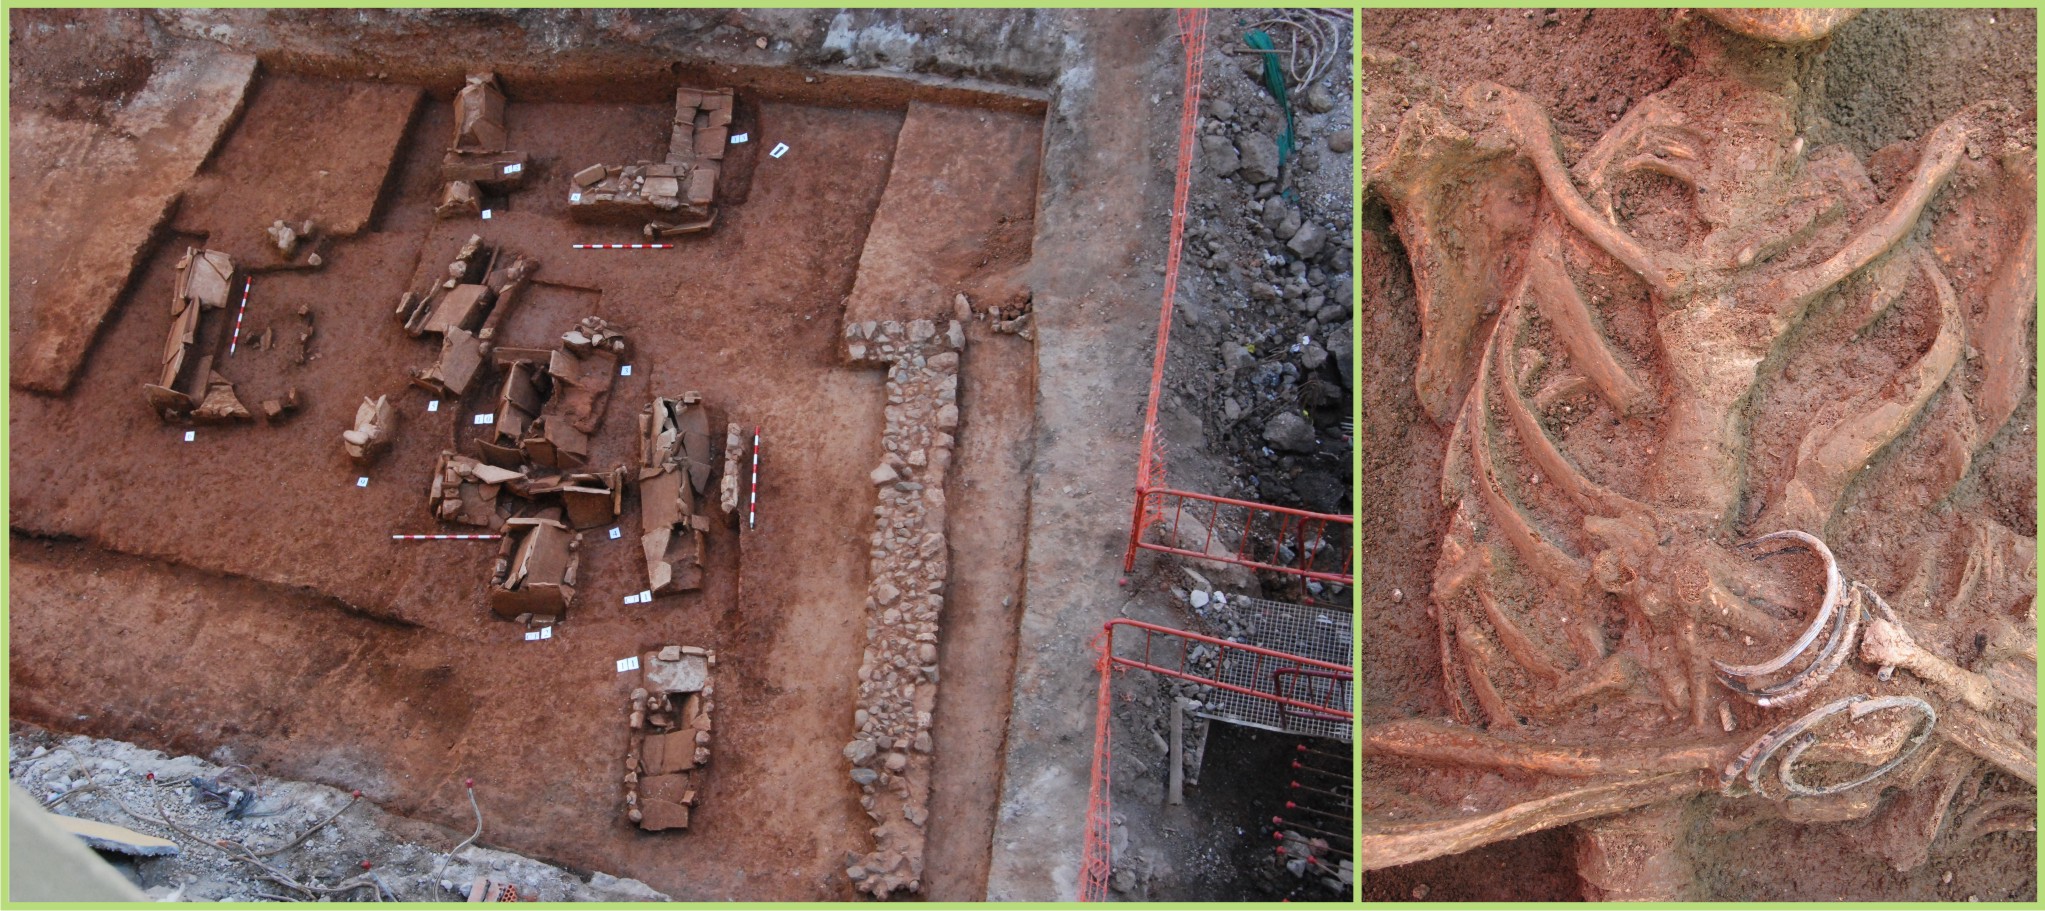 Necrópolis romana de la calle La Unión y Detalle de pulseras de vidrio como ajuar funerario